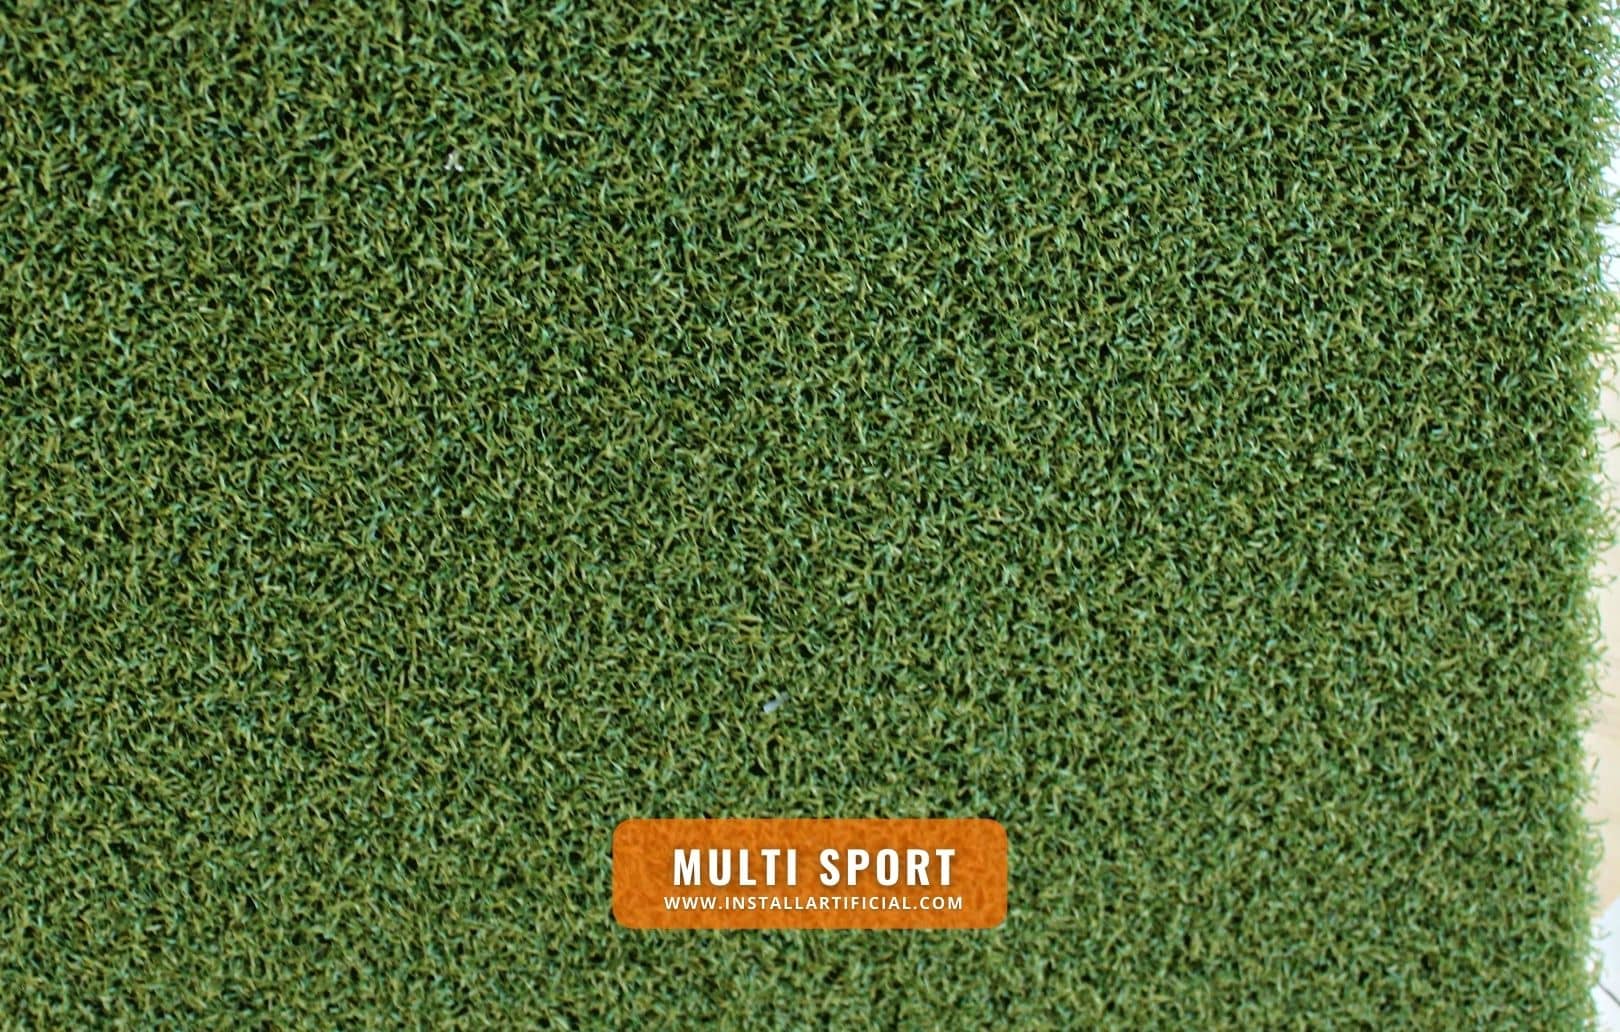 Multi Sport, Smart Turf, Top View